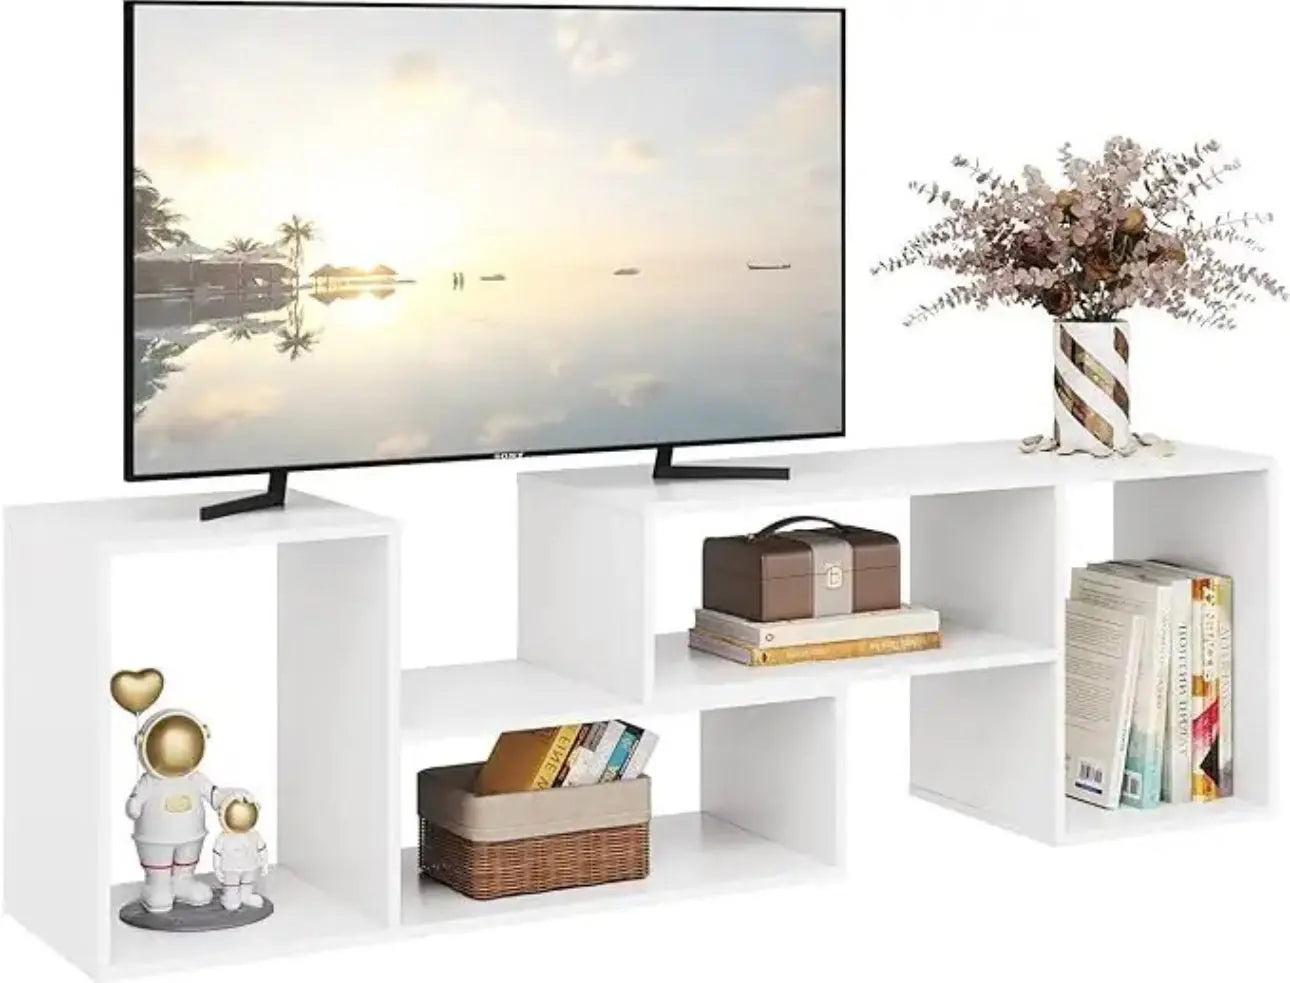 Modern Entertainment Center for TV L-shaped customizable - HomeTrendsShop